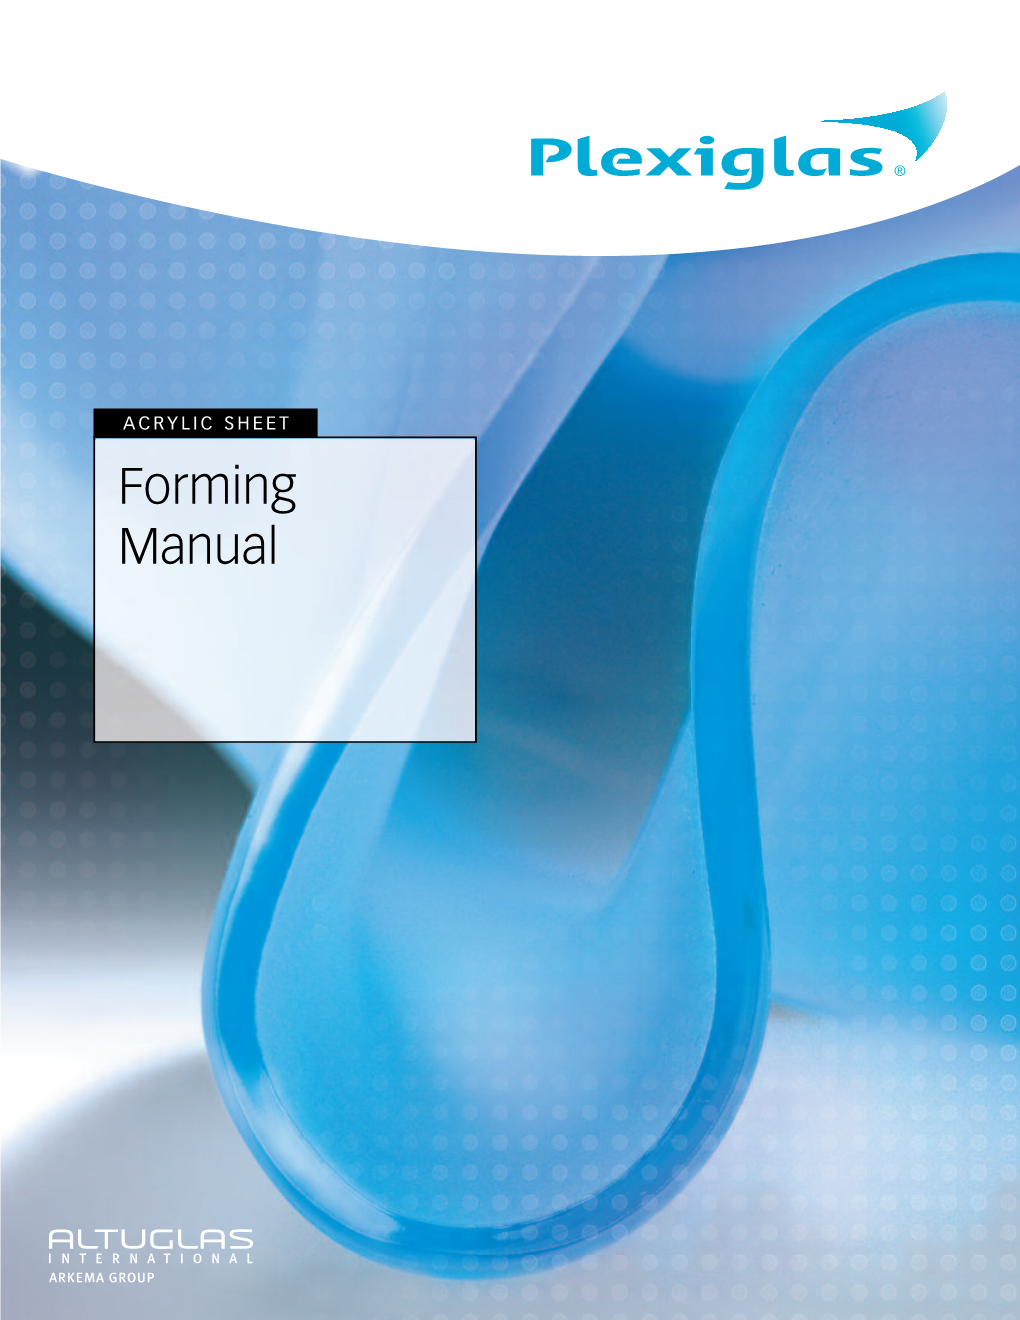 Forming Manual by Plexiglas